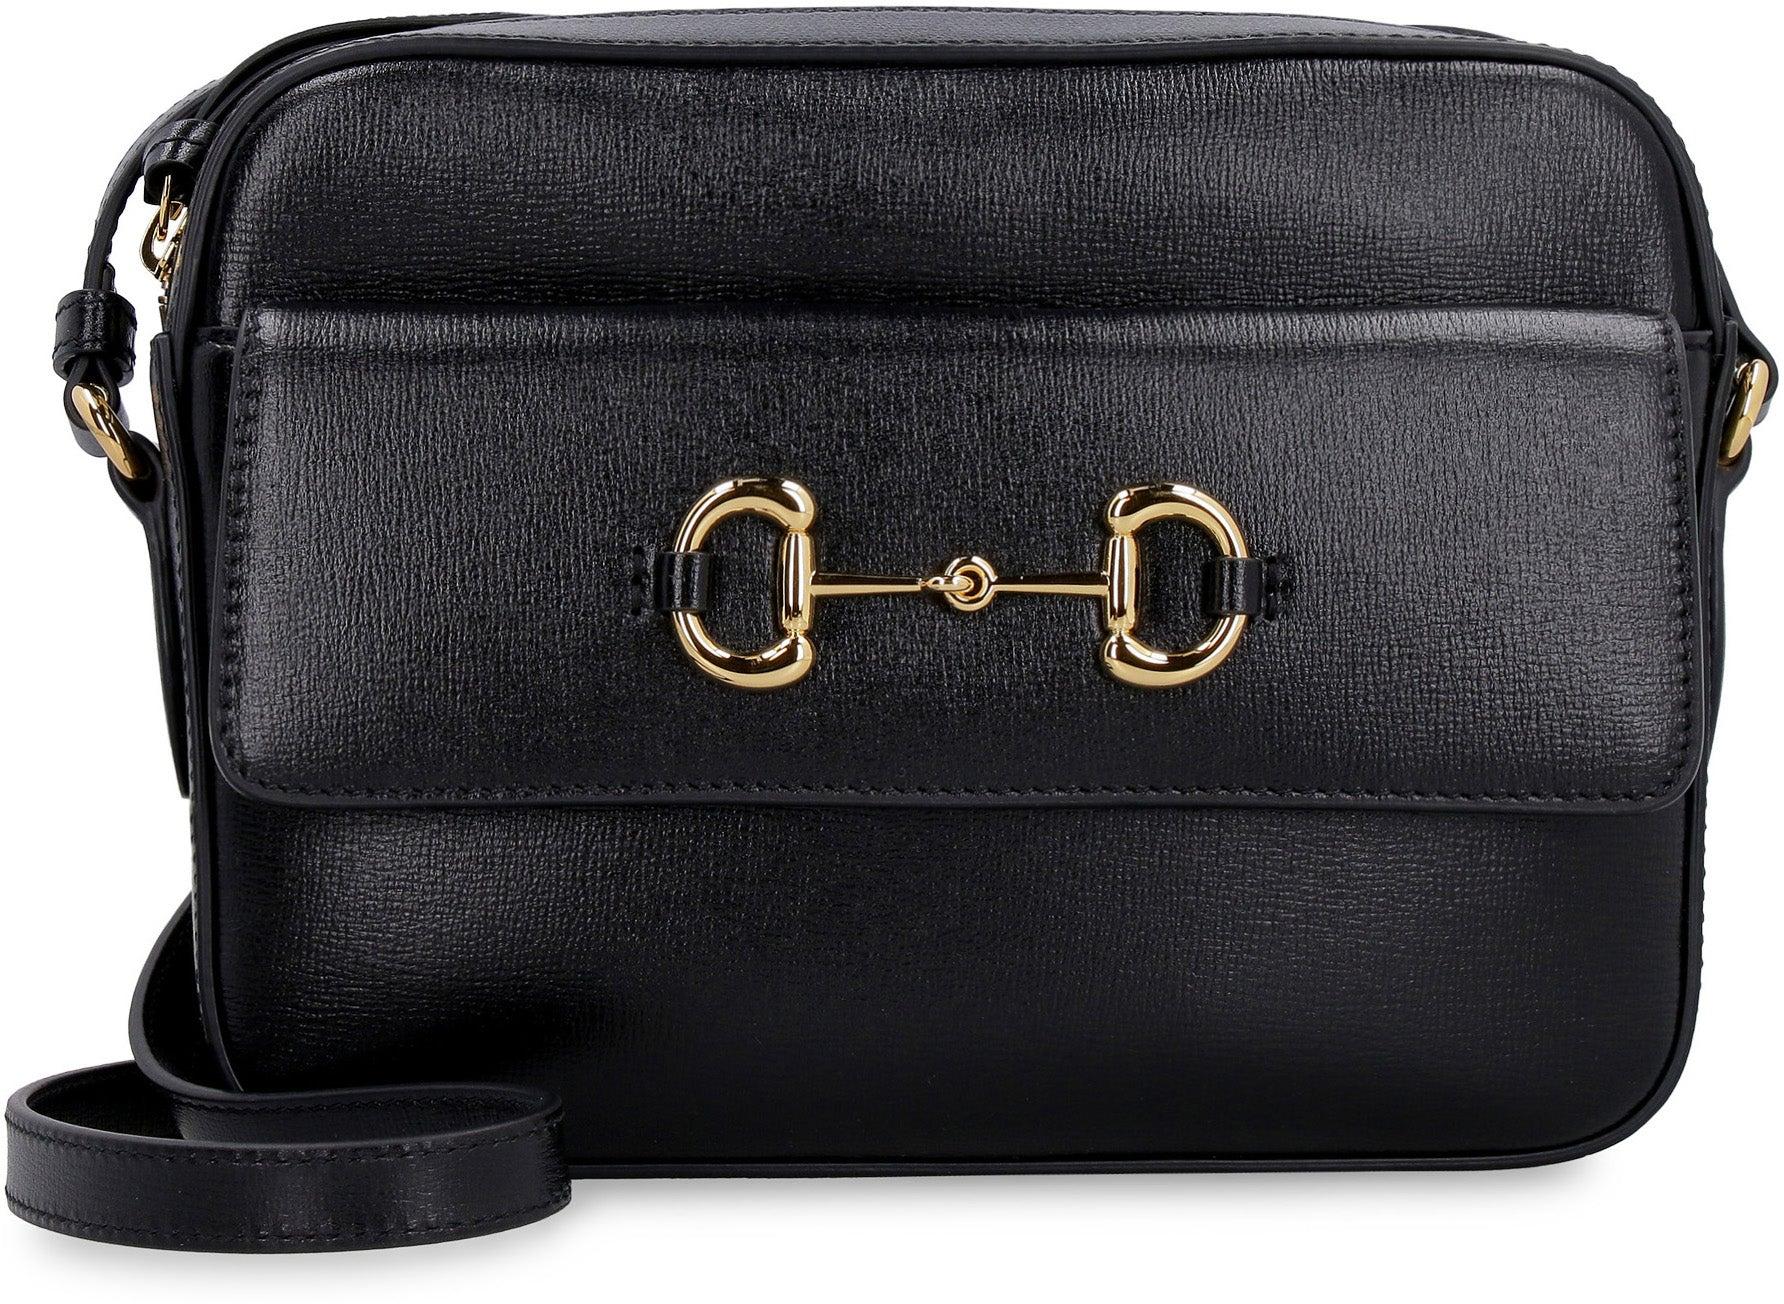 Gucci Horsebit 1955 Leather Crossbody Bag in Black | Lyst